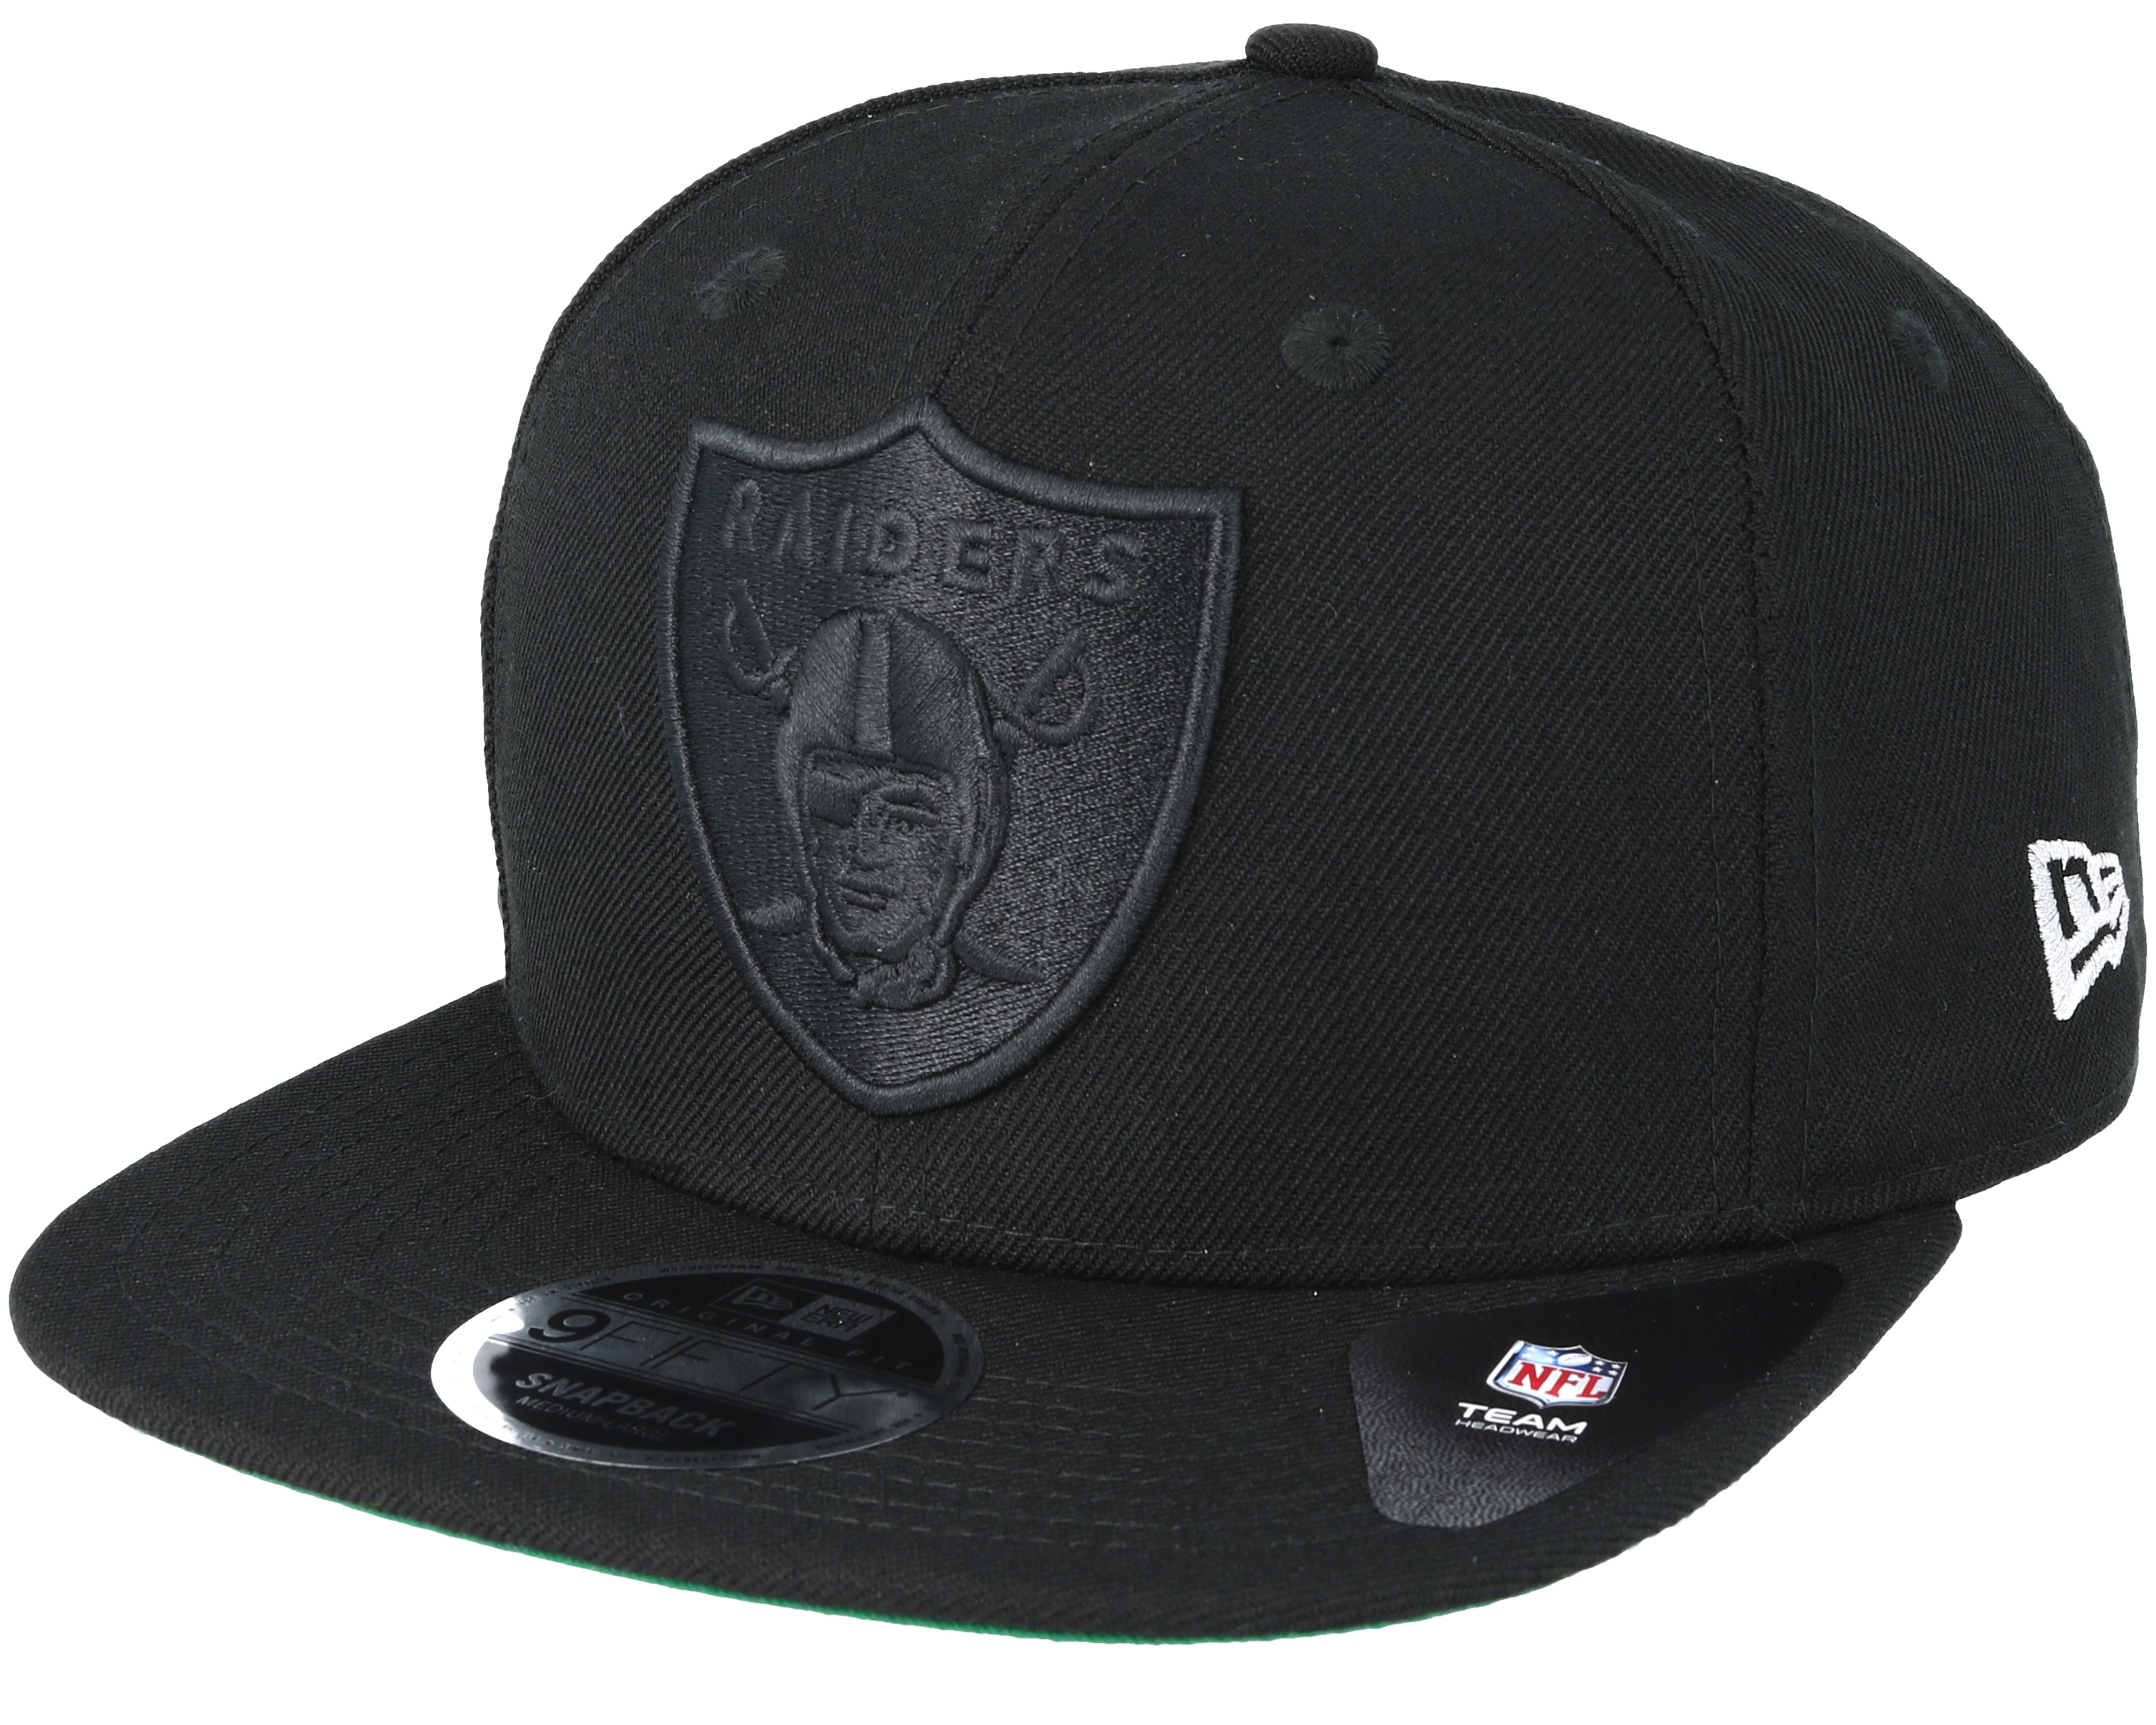 Oakland Raiders Winners Patch Black Snapback - New Era caps | Hatstore ...